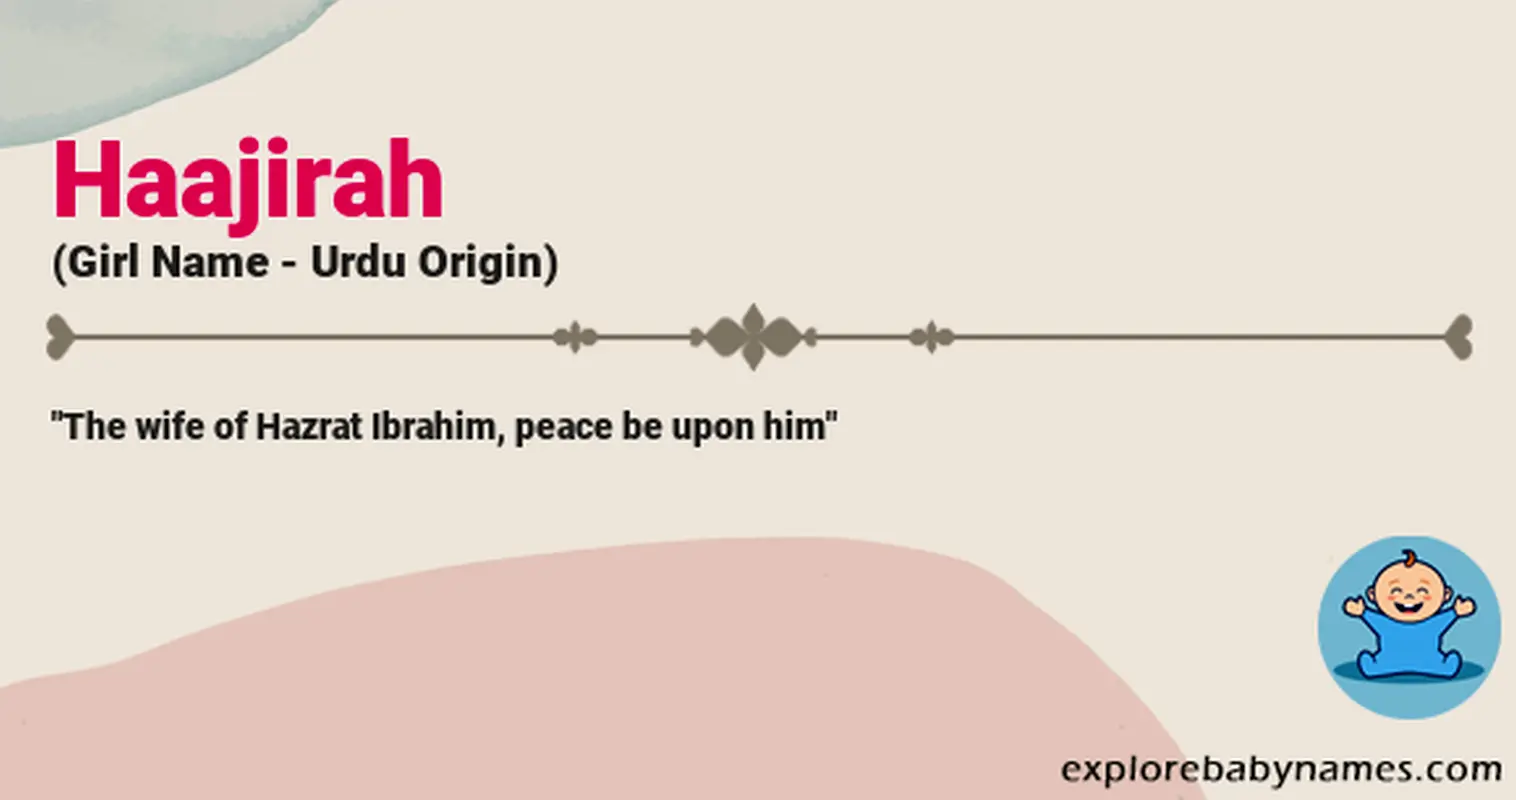 Meaning of Haajirah